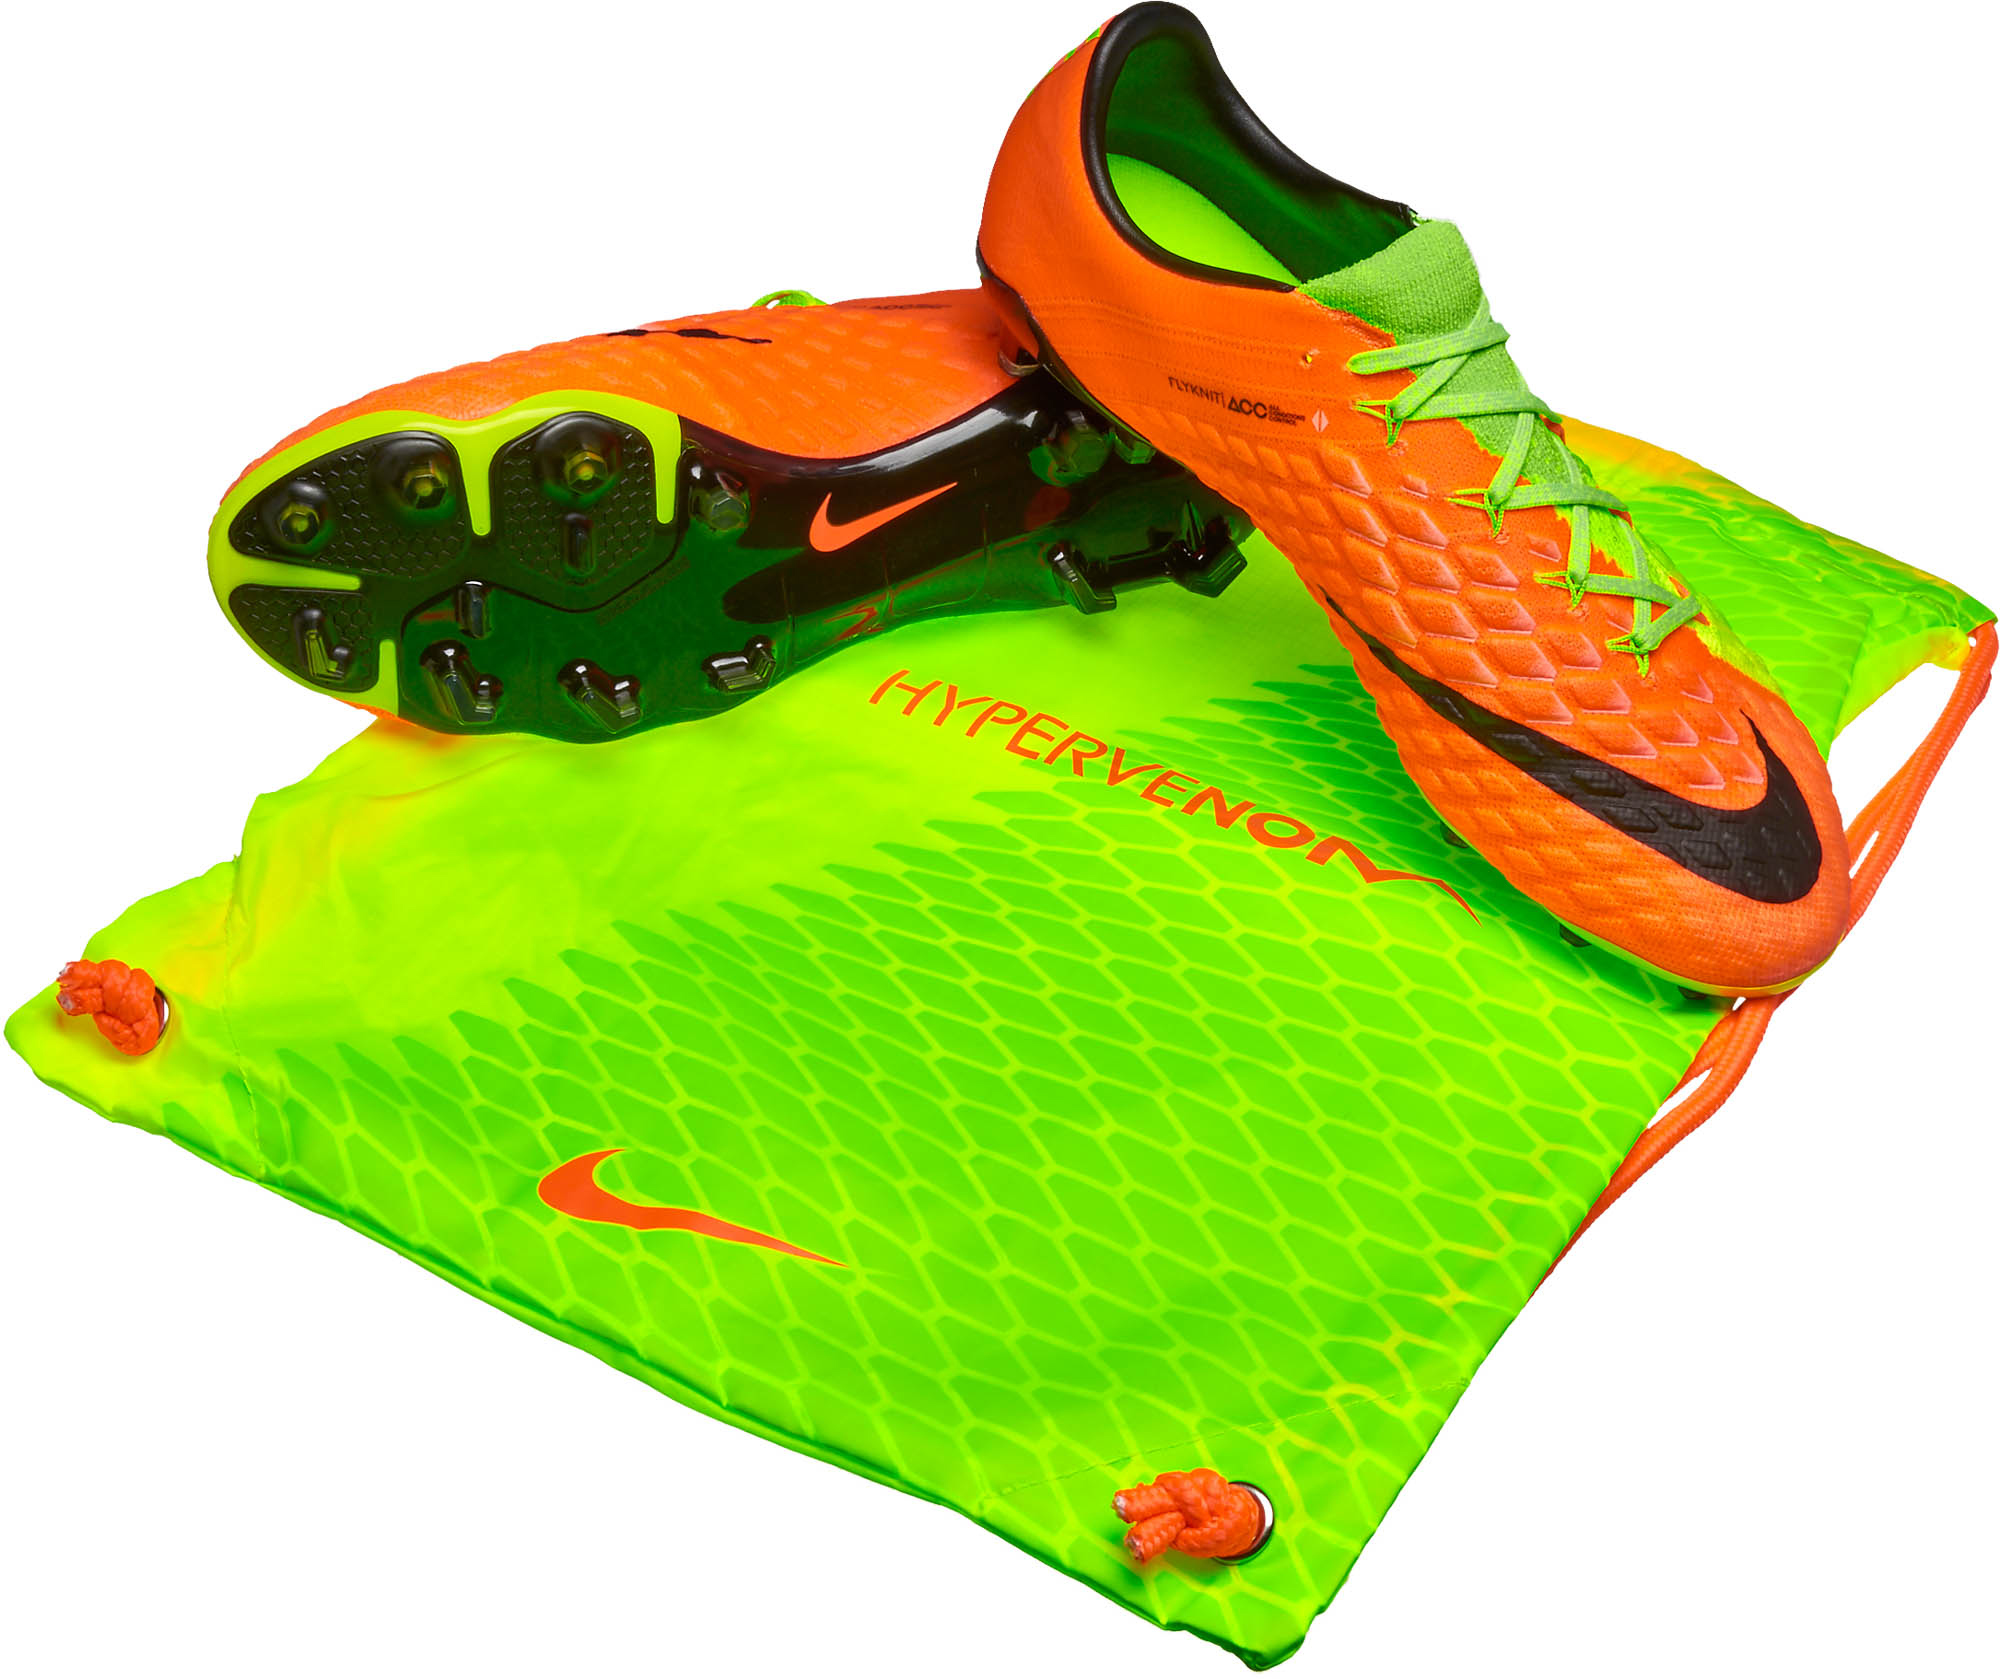 Hypervenom Phantom FG Soccer - Green